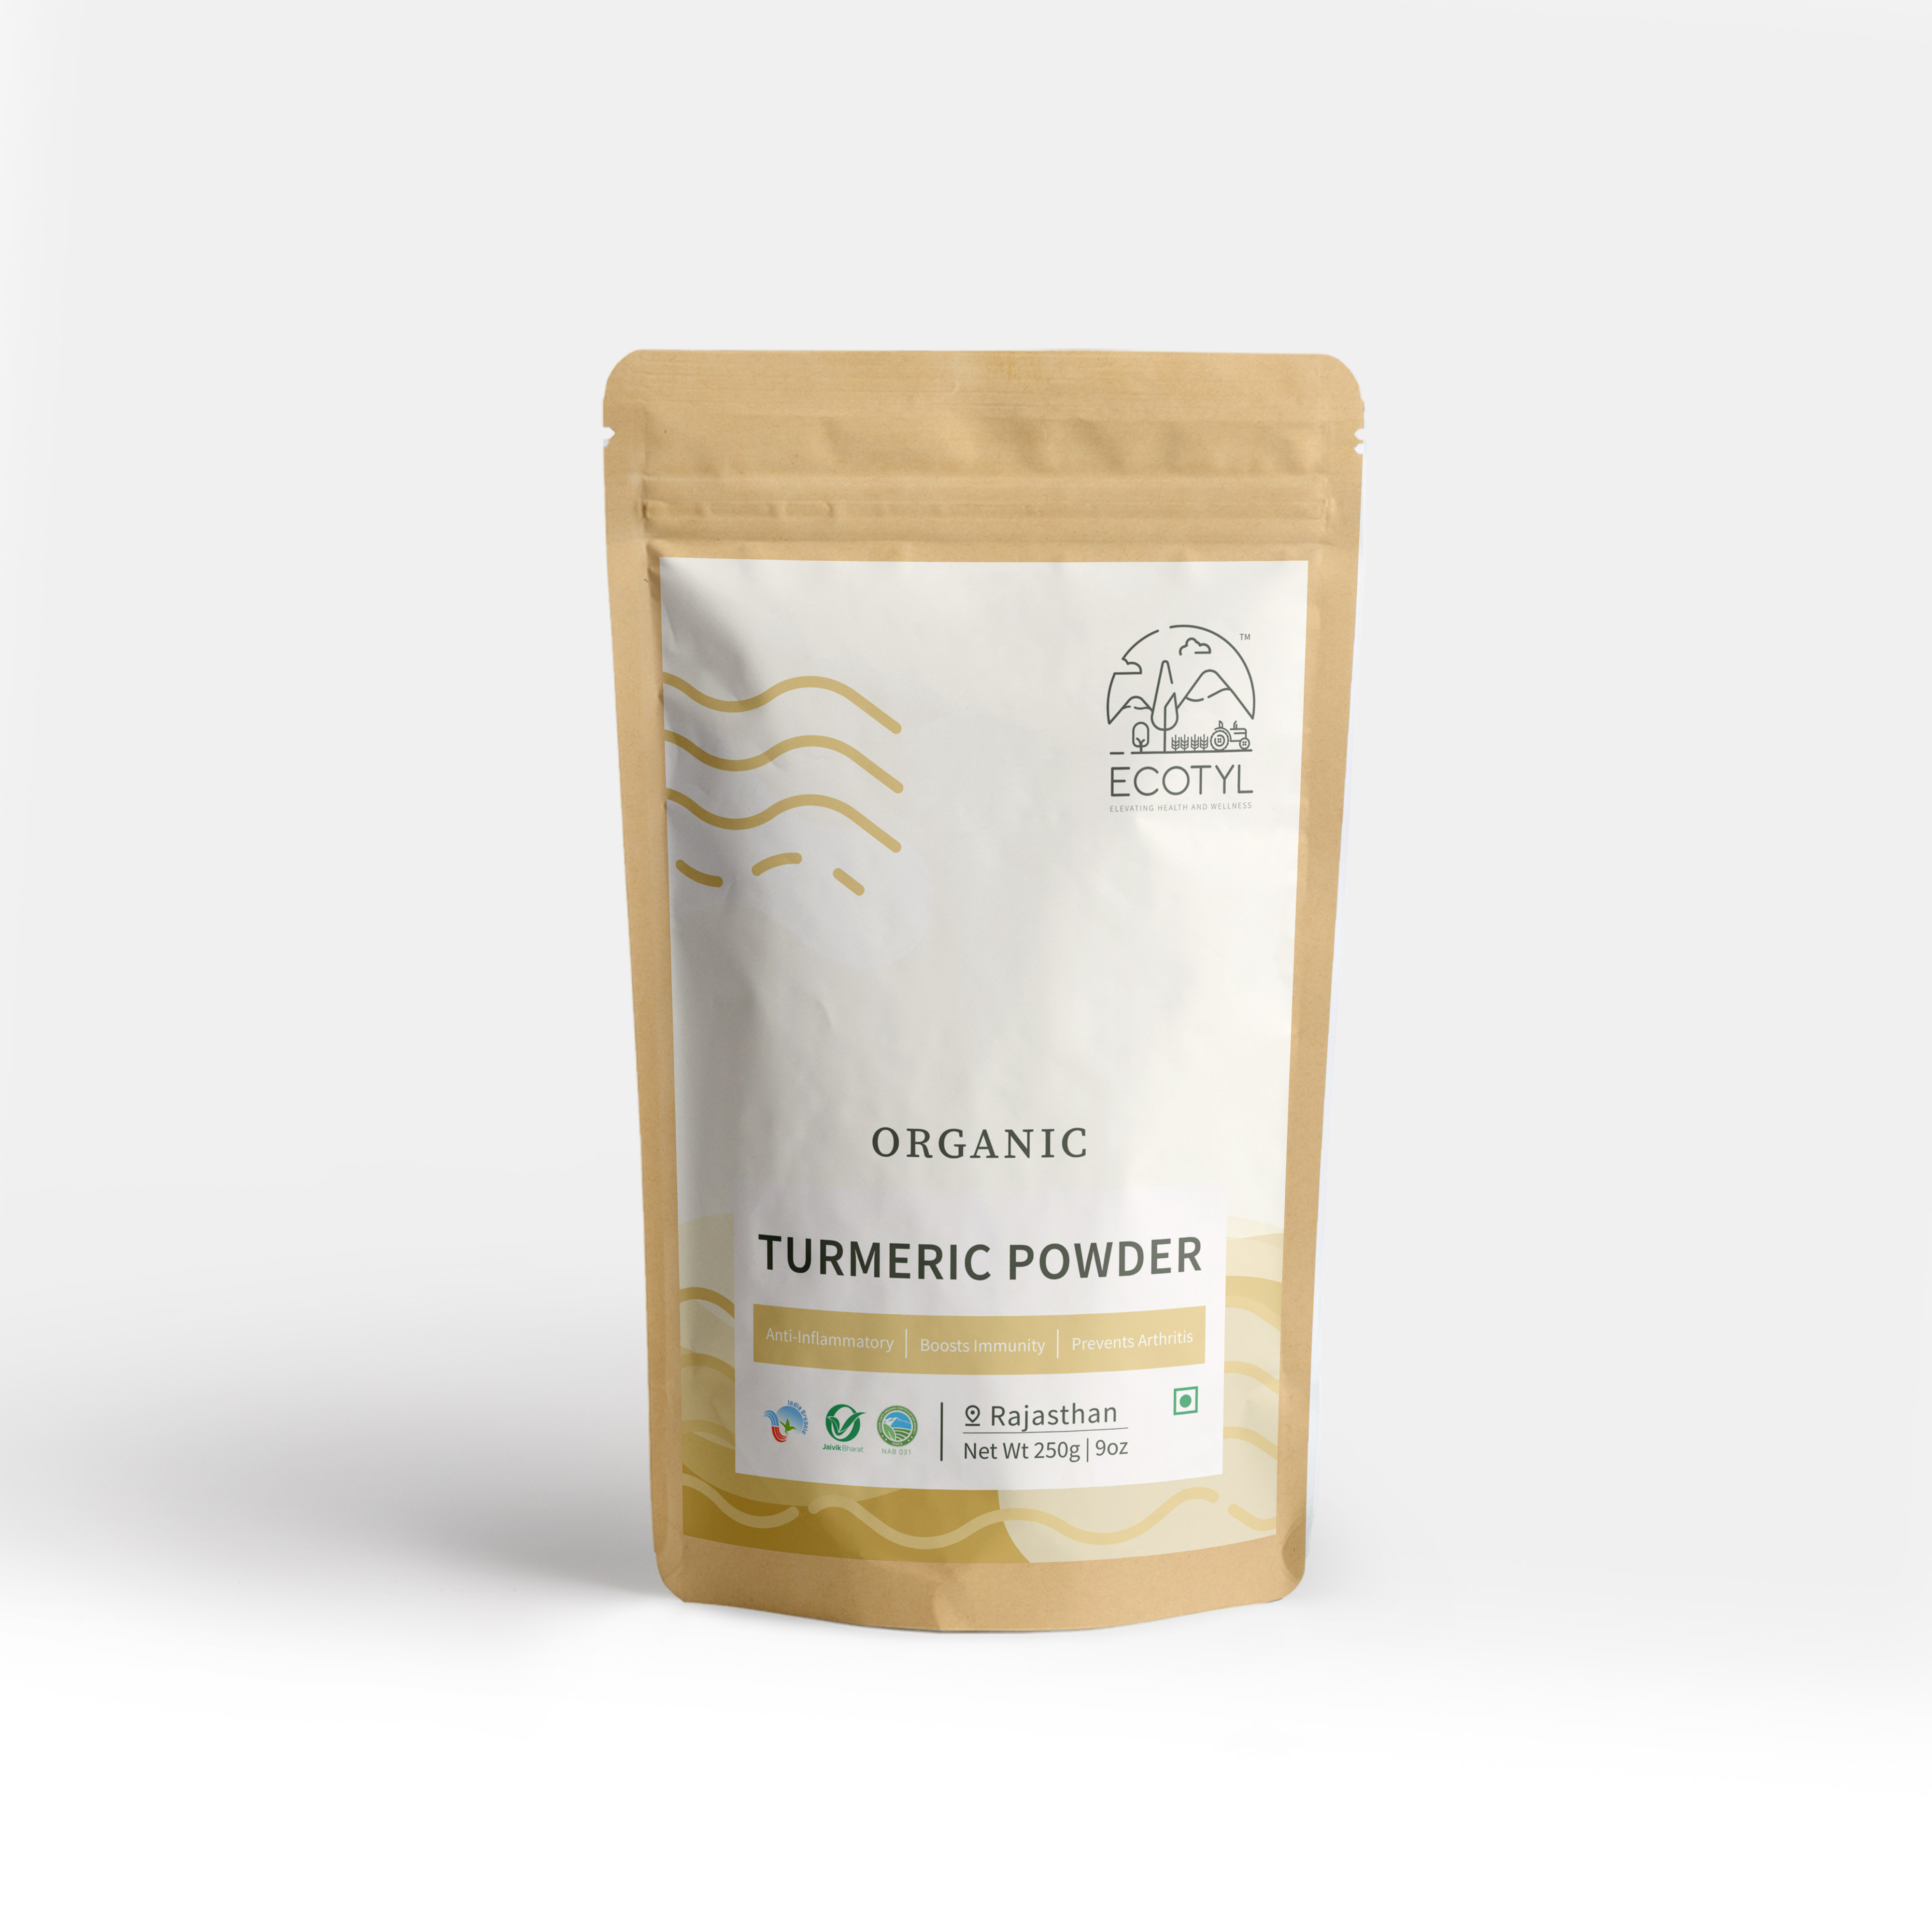 Buy Ecotyl Lakadong Turmeric Powder - 200 g at Best Price Online